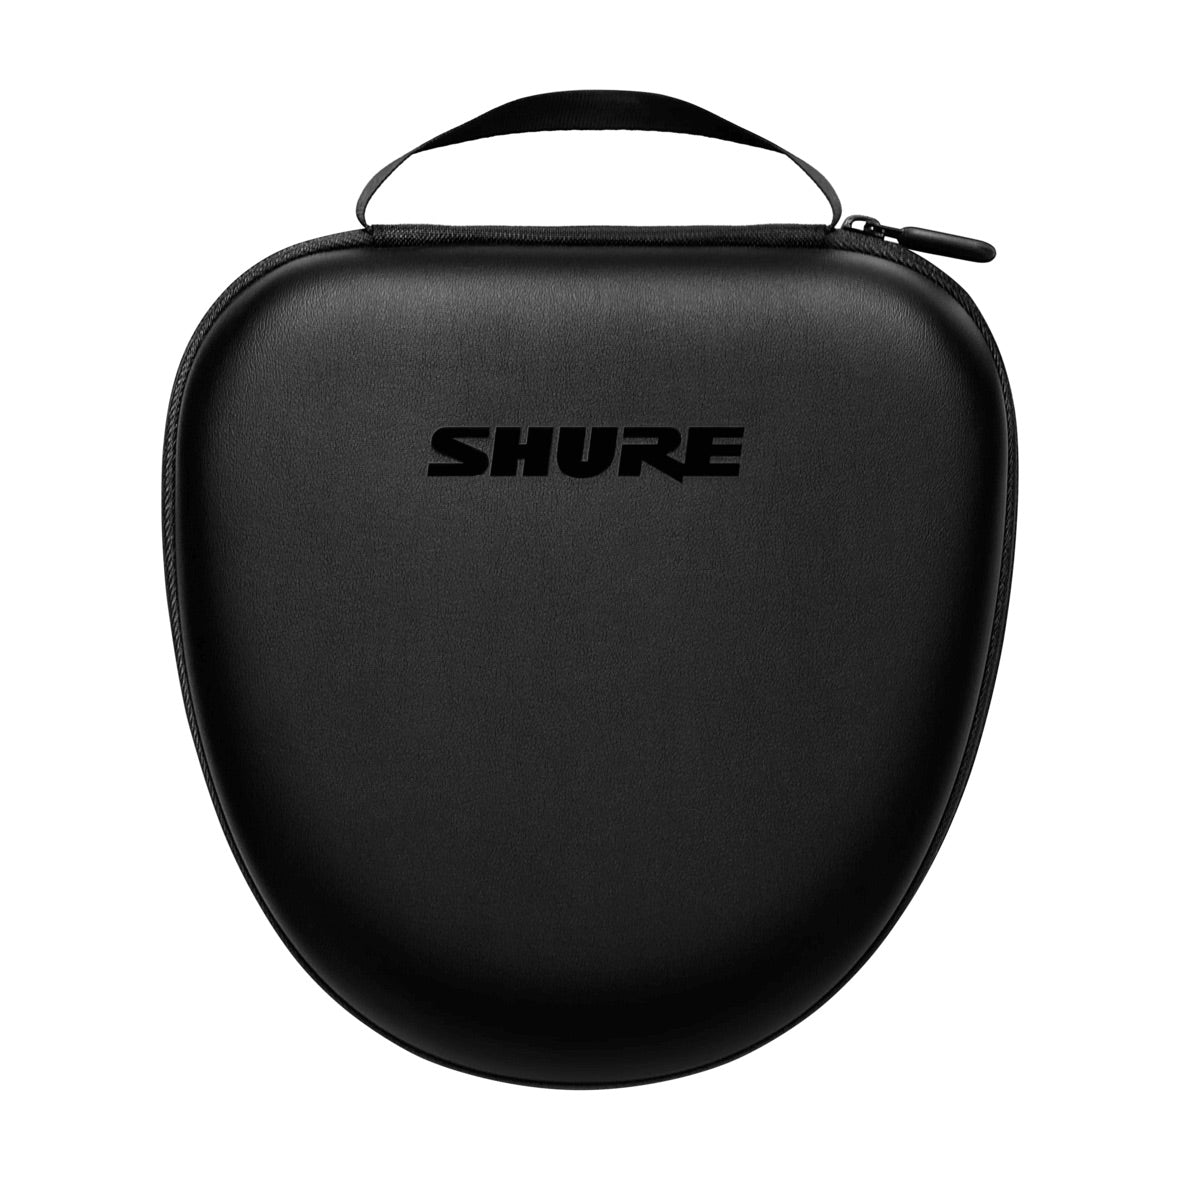 Shure AONIC 50 GEN 2 - Wireless Noise Cancelling Headphones, case